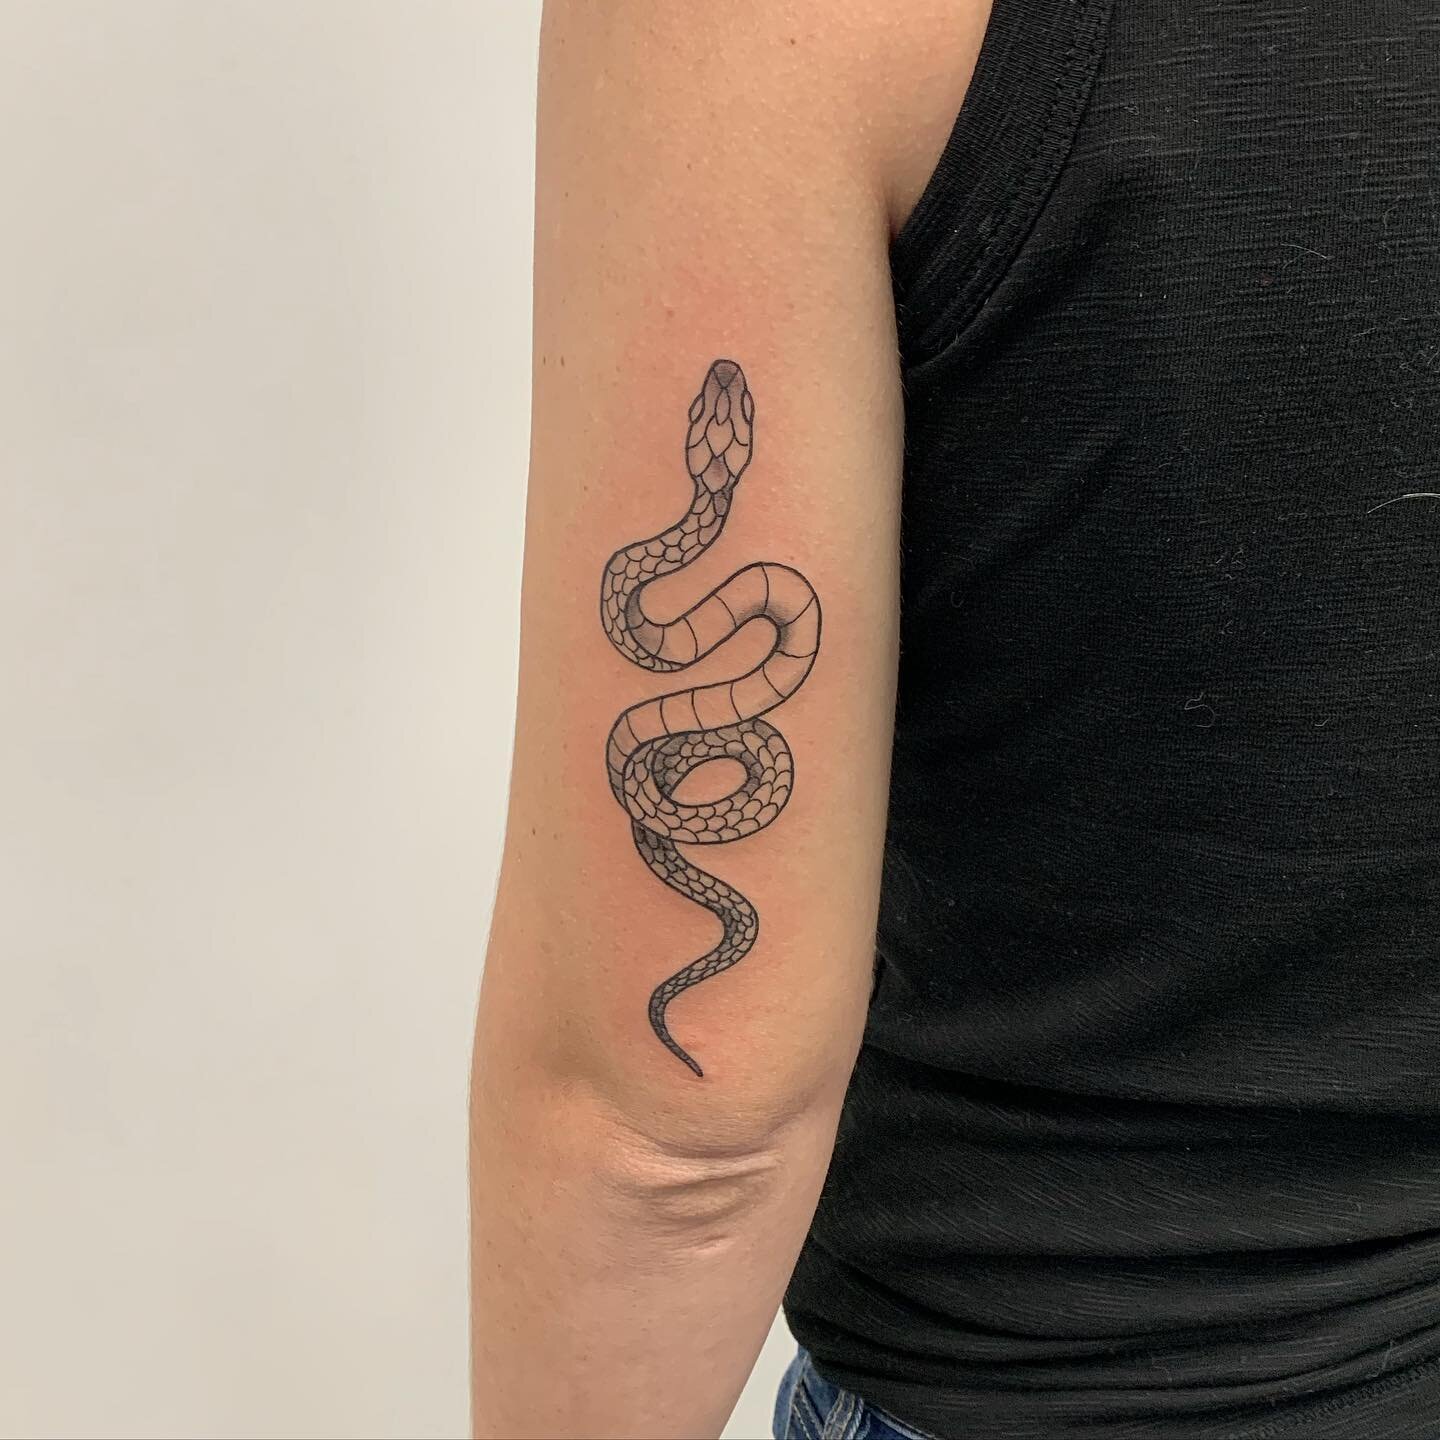 Nier Automata Inspiration Snake Tattoo by Haku-Psychose on DeviantArt